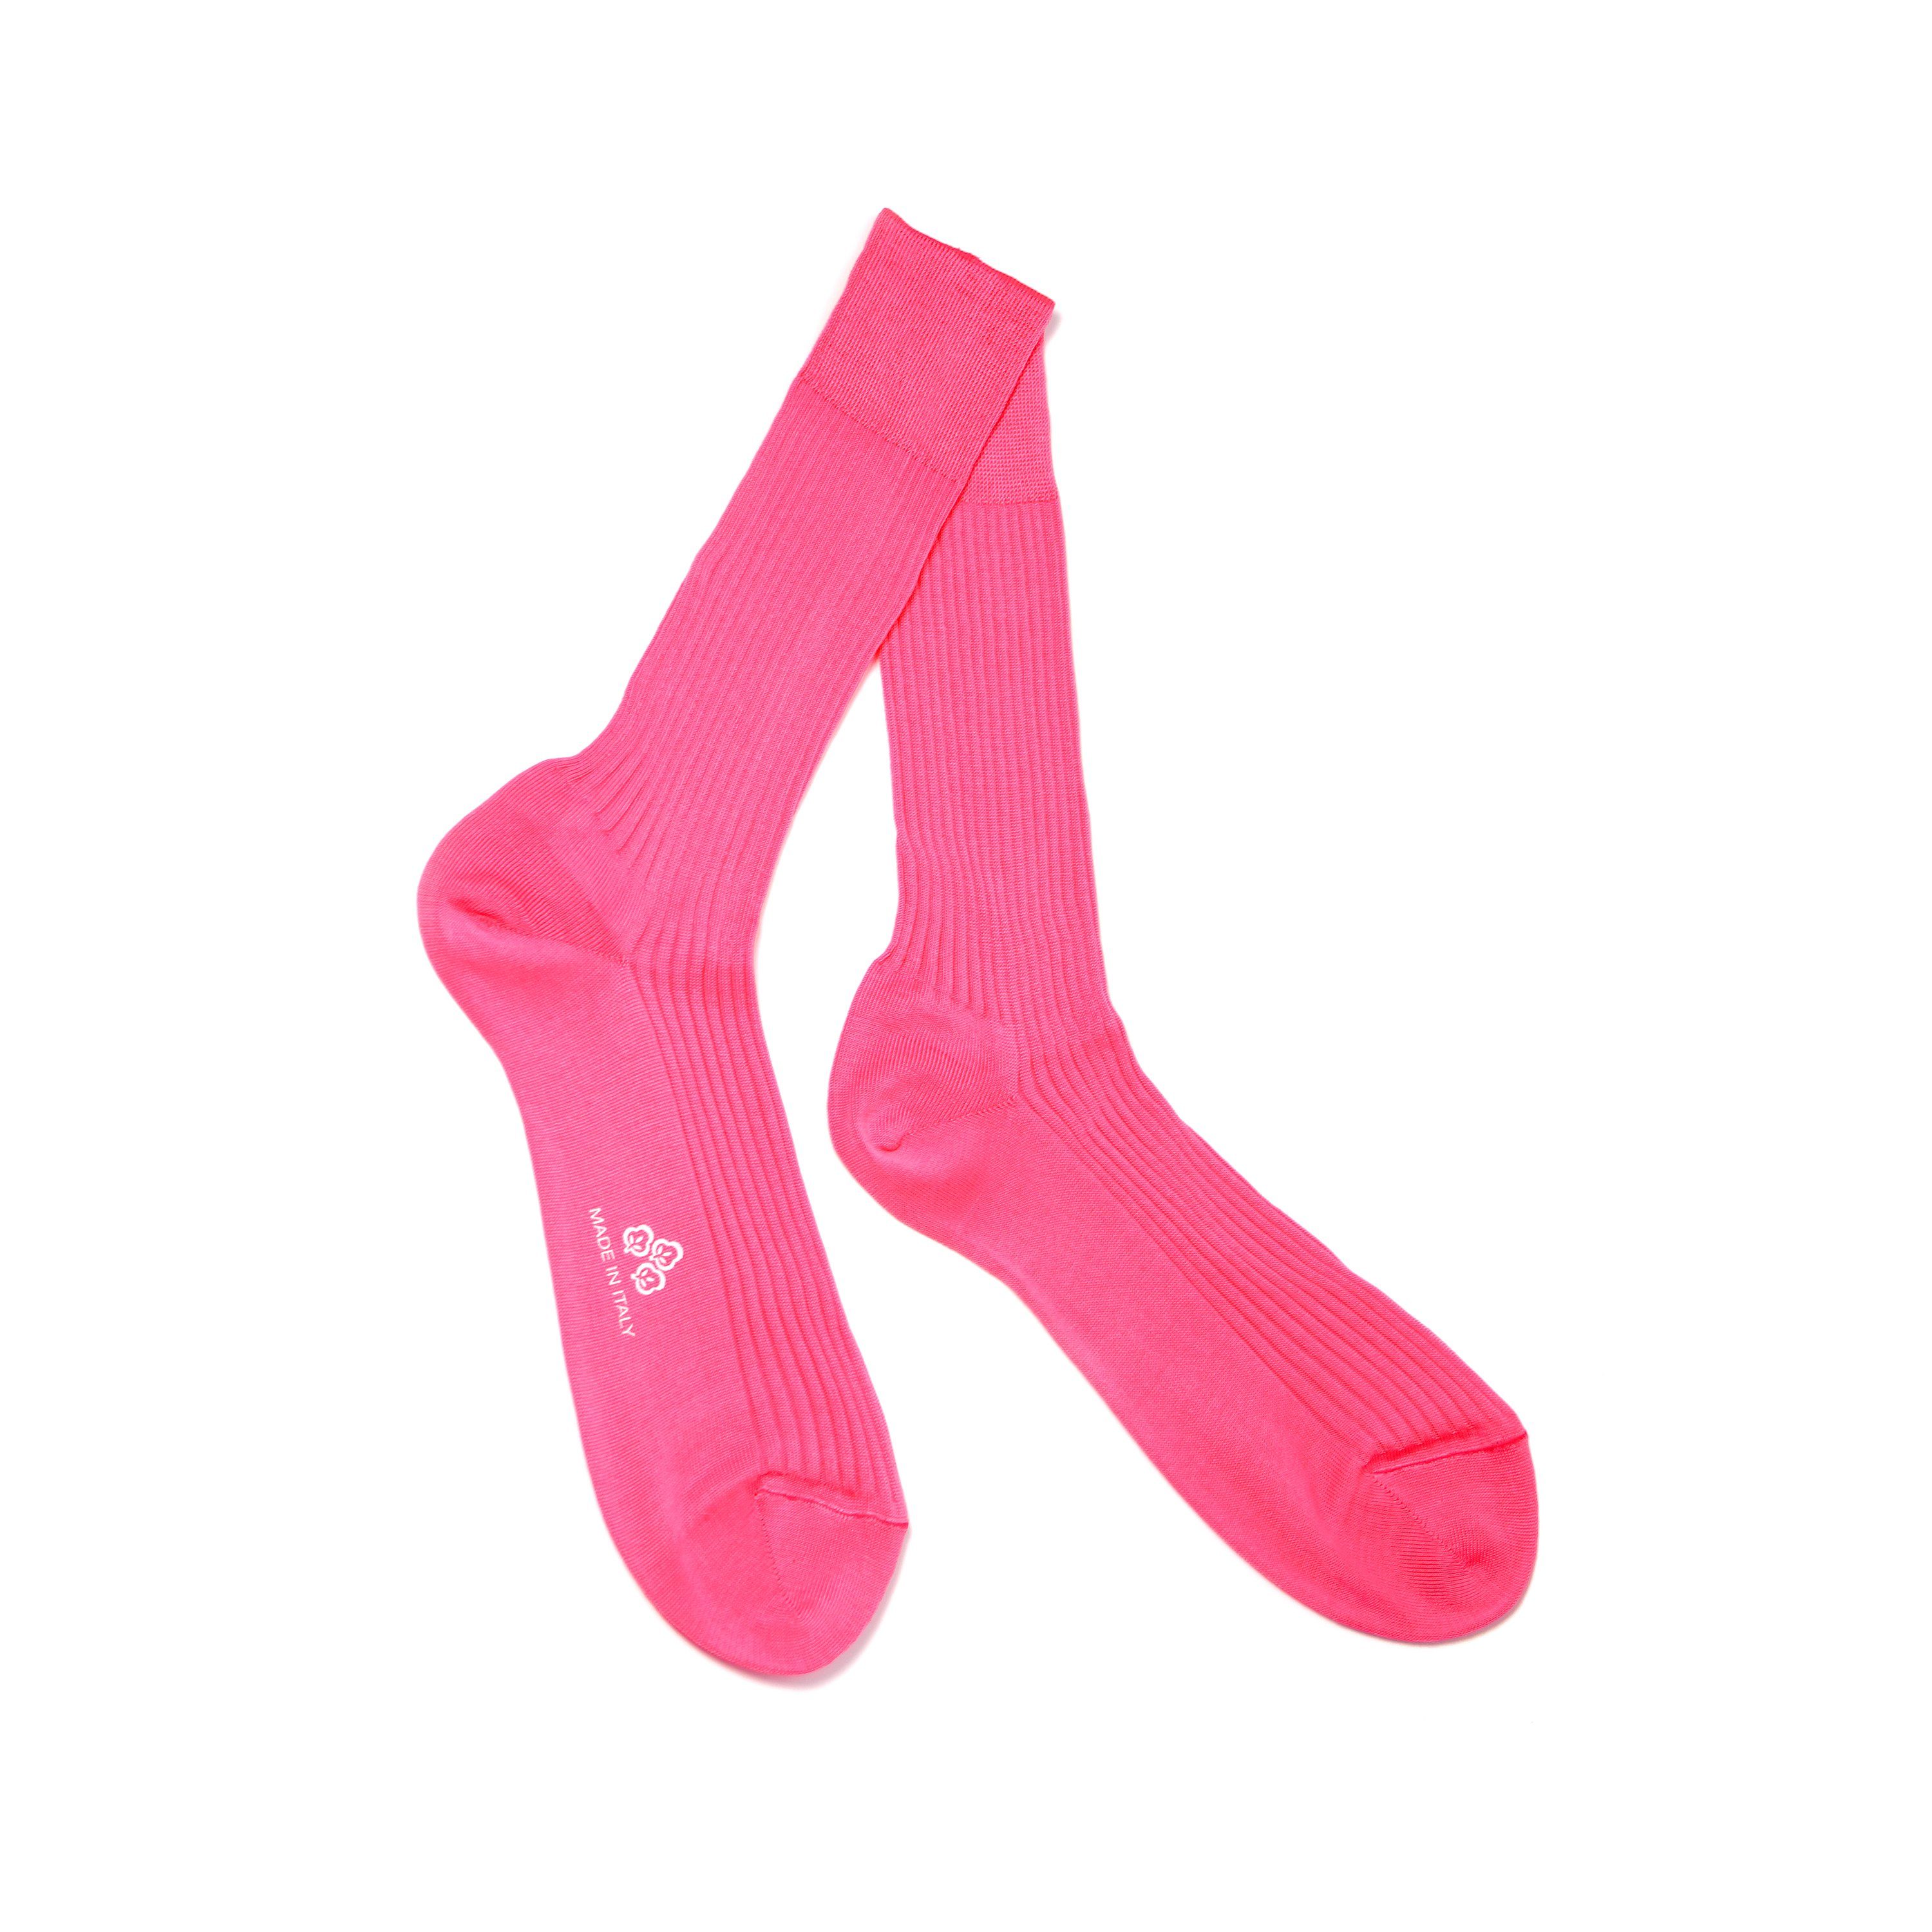 Carlo Baumwolle, Paar) Socken aus in (1 Di Business-Socken, Gentleman-Socken, Made Rosa Italy